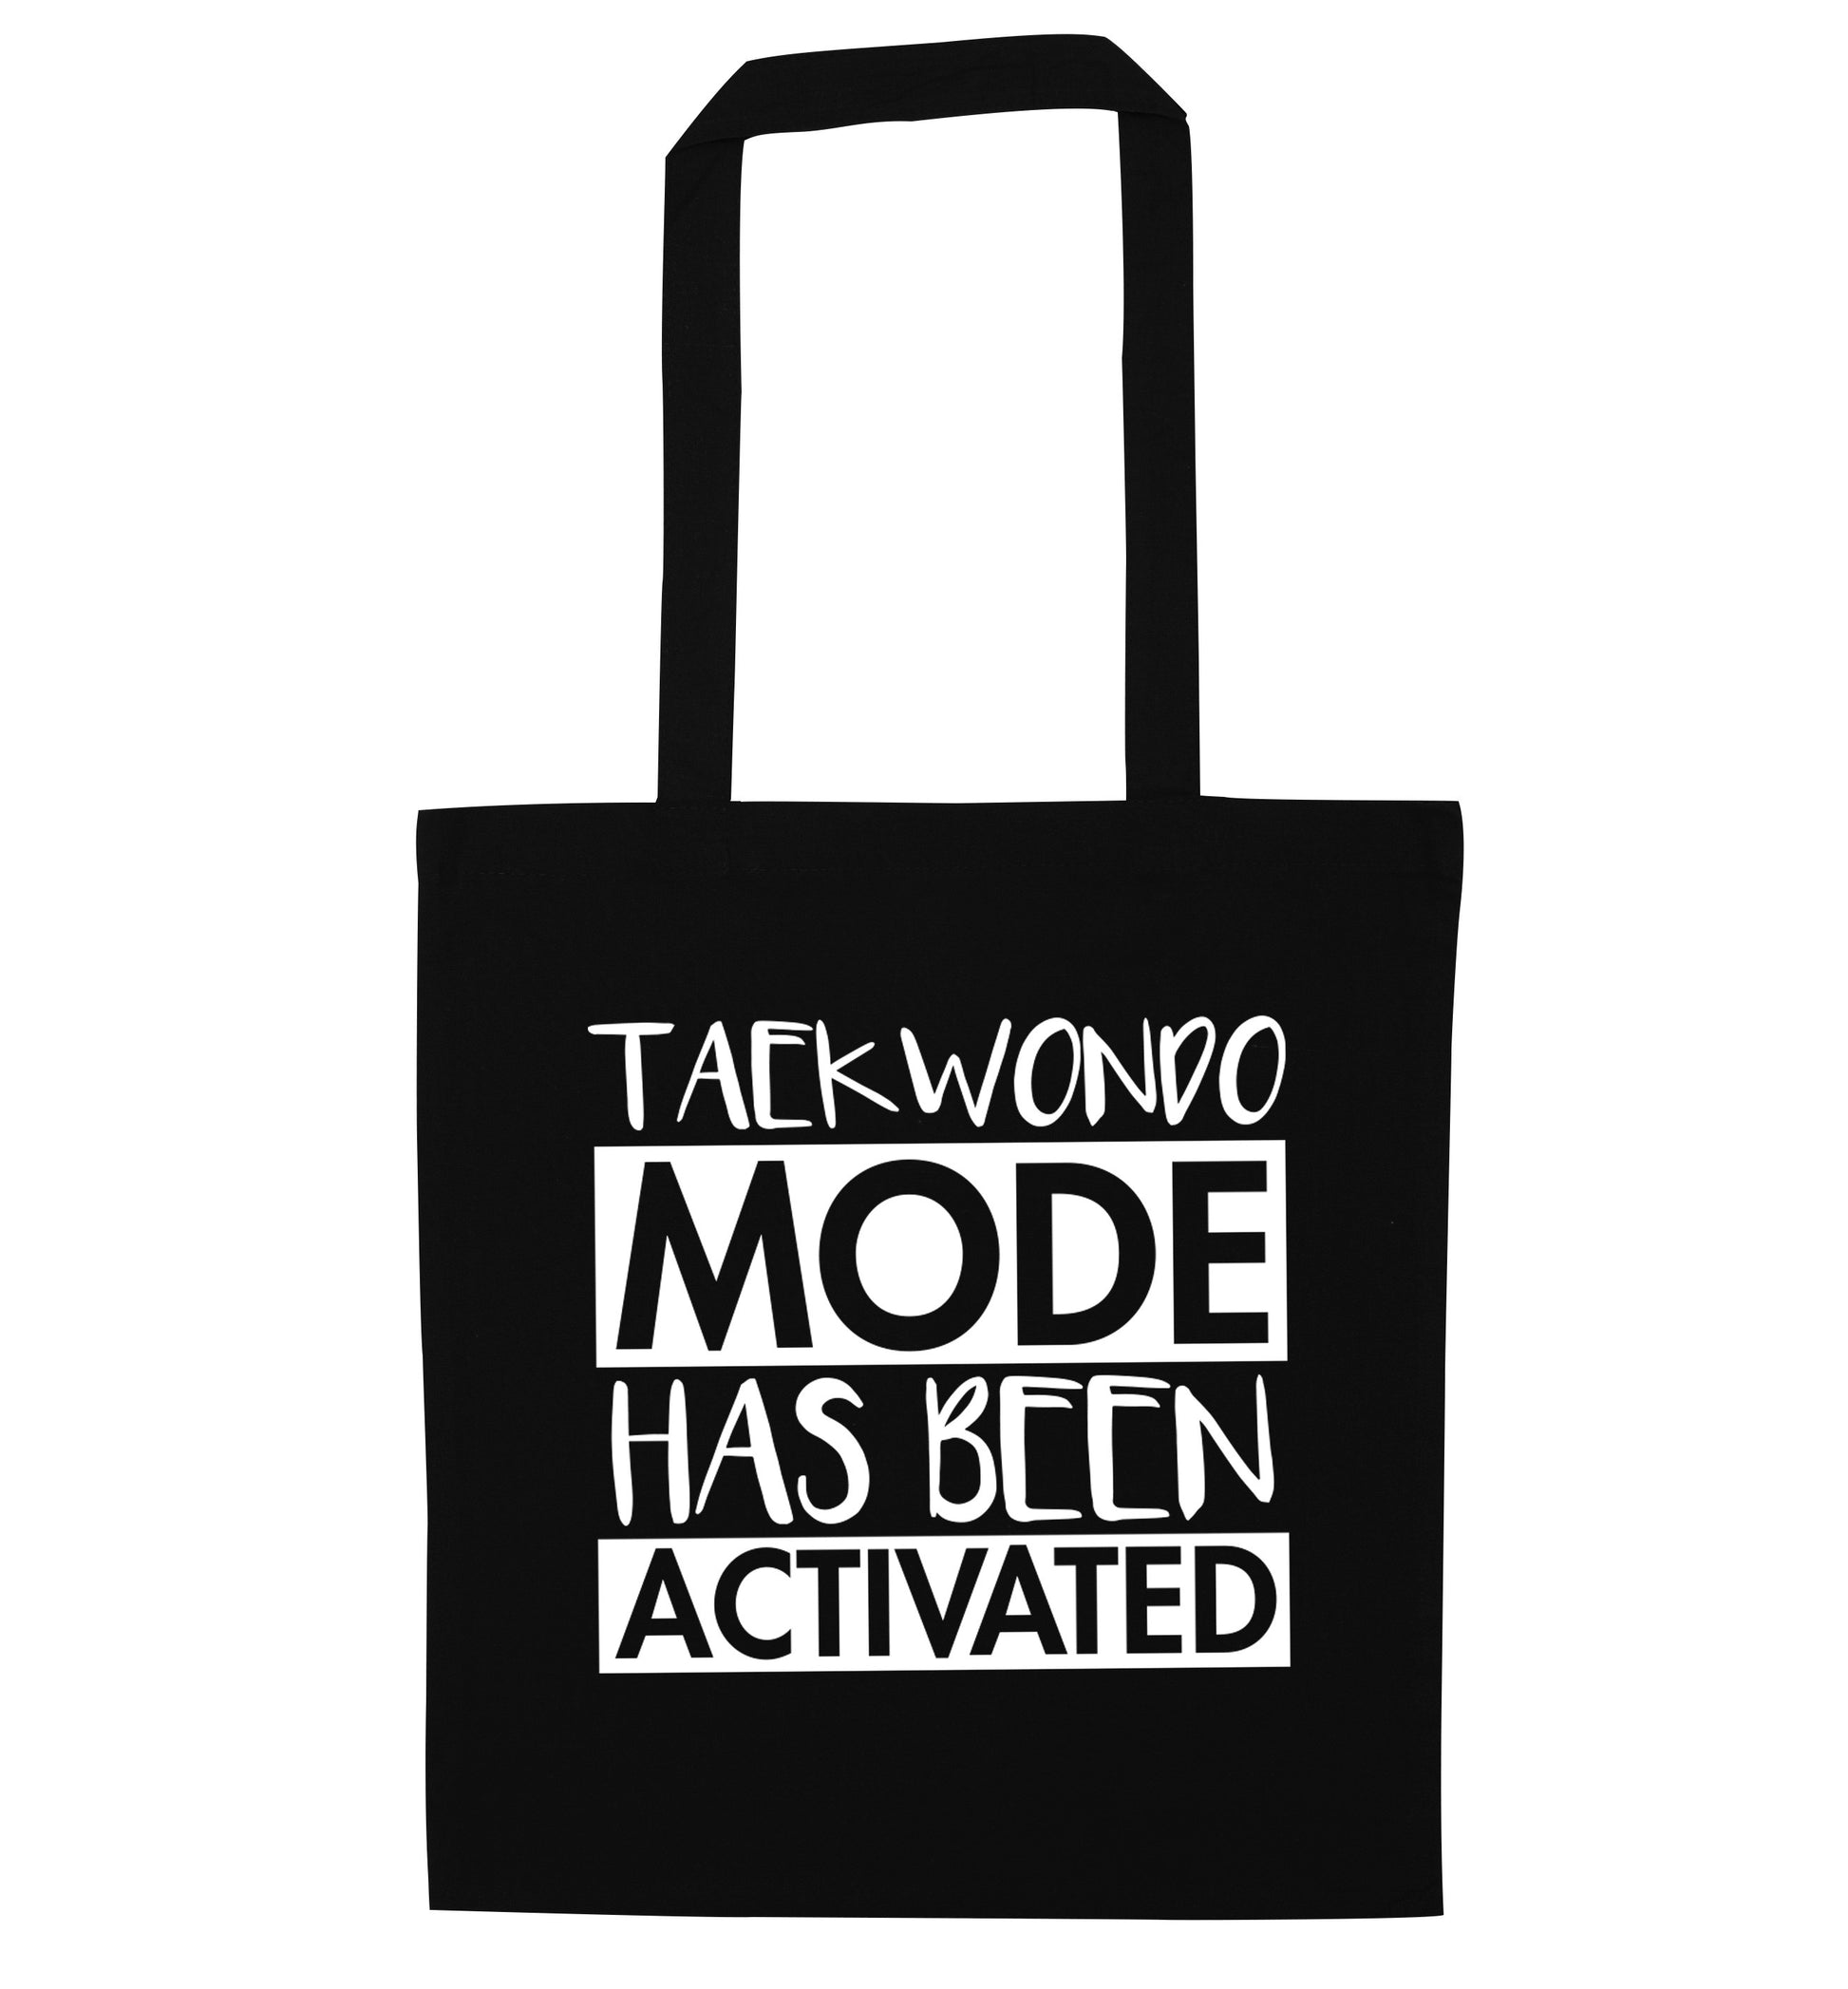 Taekwondo mode activated black tote bag